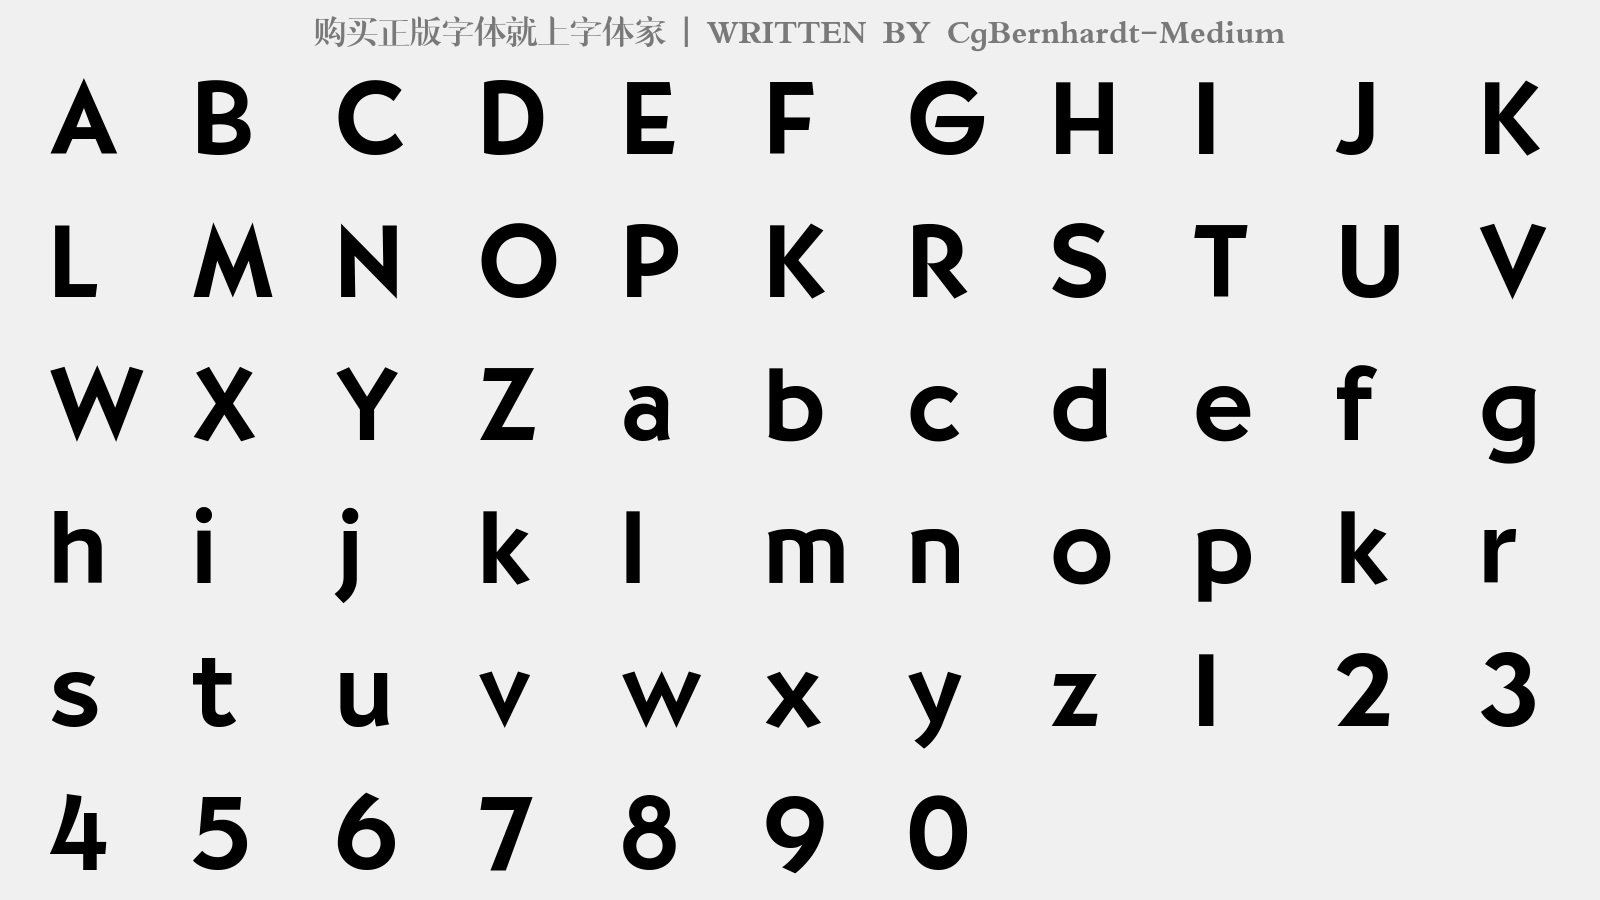 CgBernhardt-Medium - 大写字母/小写字母/数字